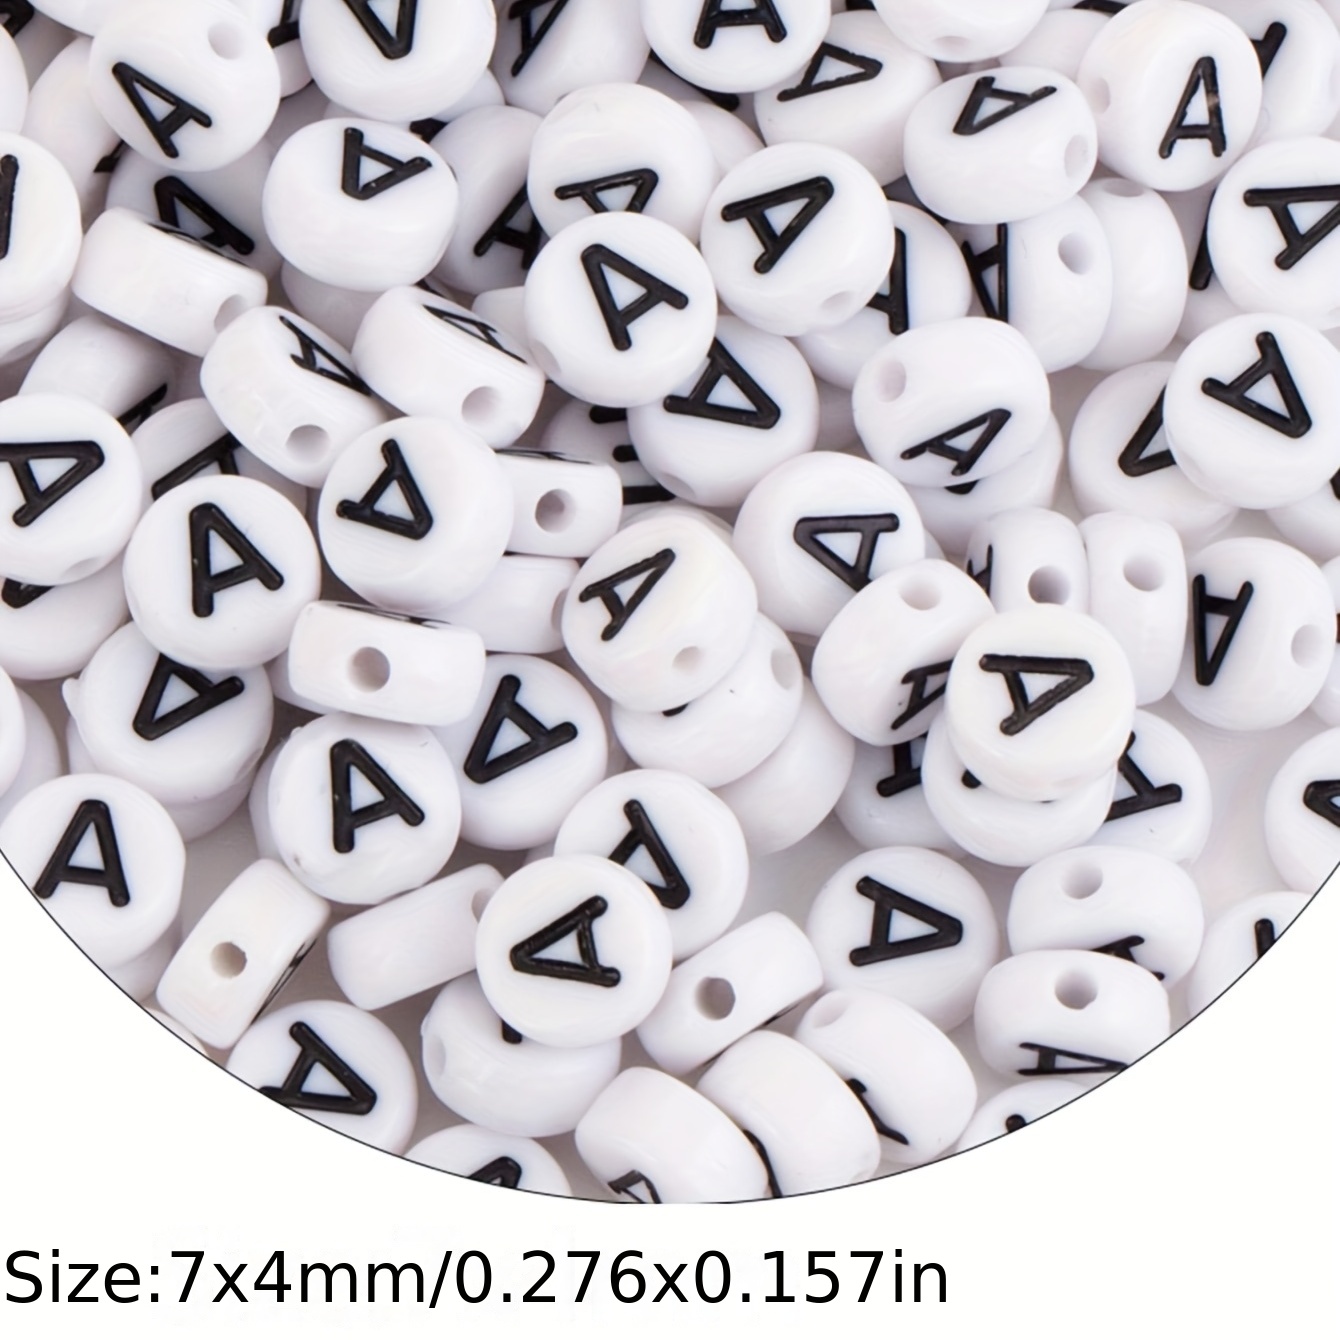 Acrylic Letter Beads Mix (7 x 3 mm) White-Black (200 pcs)